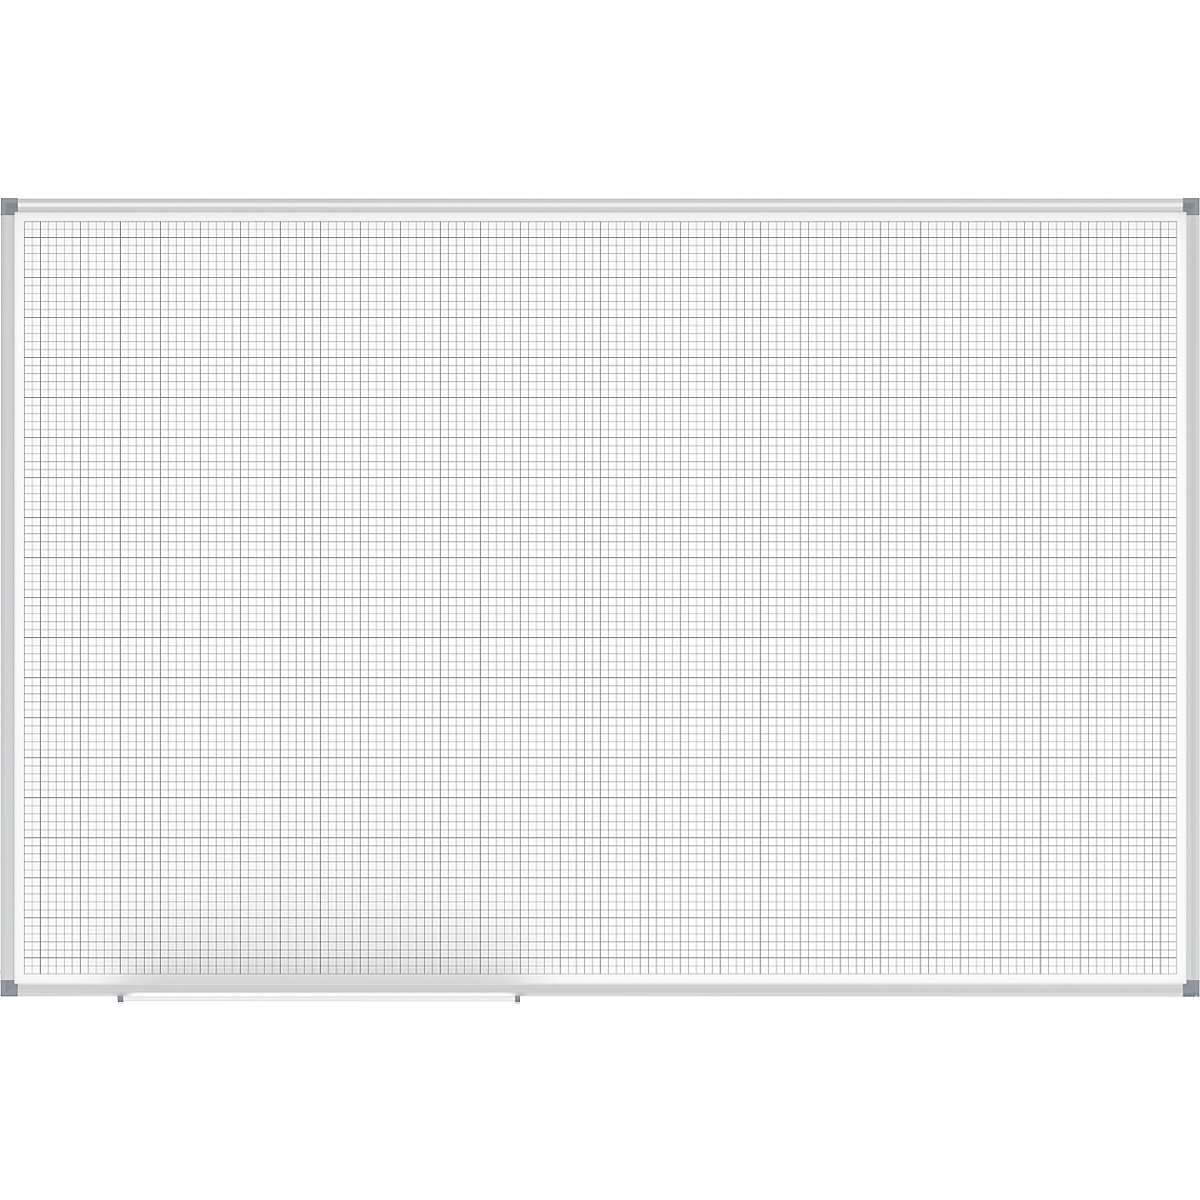 Tablero reticulado MAULstandard, blanco – MAUL, retícula de 10 x 10 / 50 x 50 mm, A x H 1500 x 1000 mm-4